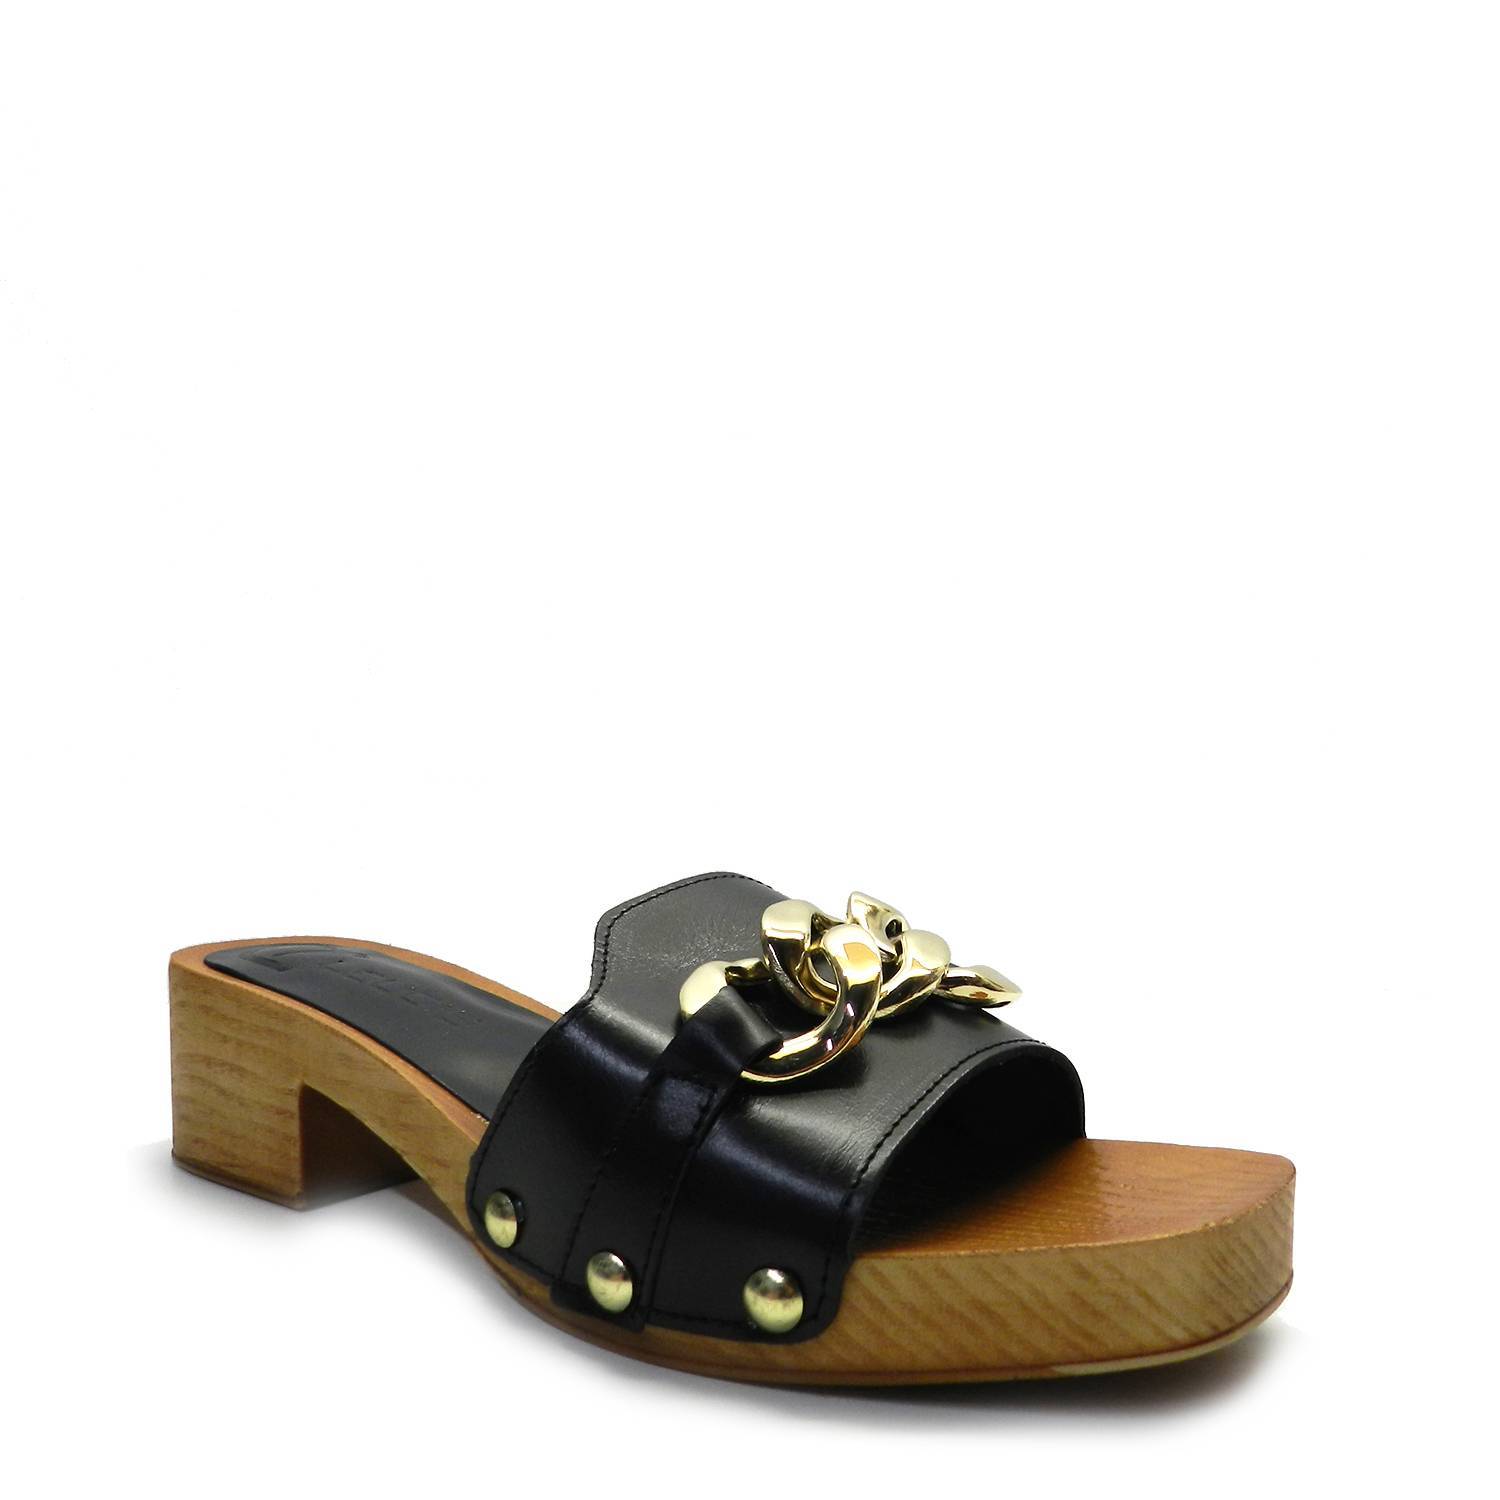 Sandalias de la marca Escala, modelo Cerdeña en color negro. Sandalia suela de madera con tacón ancho. Pala negra con detalle de maxi hebilla dorada y remaches dorados.